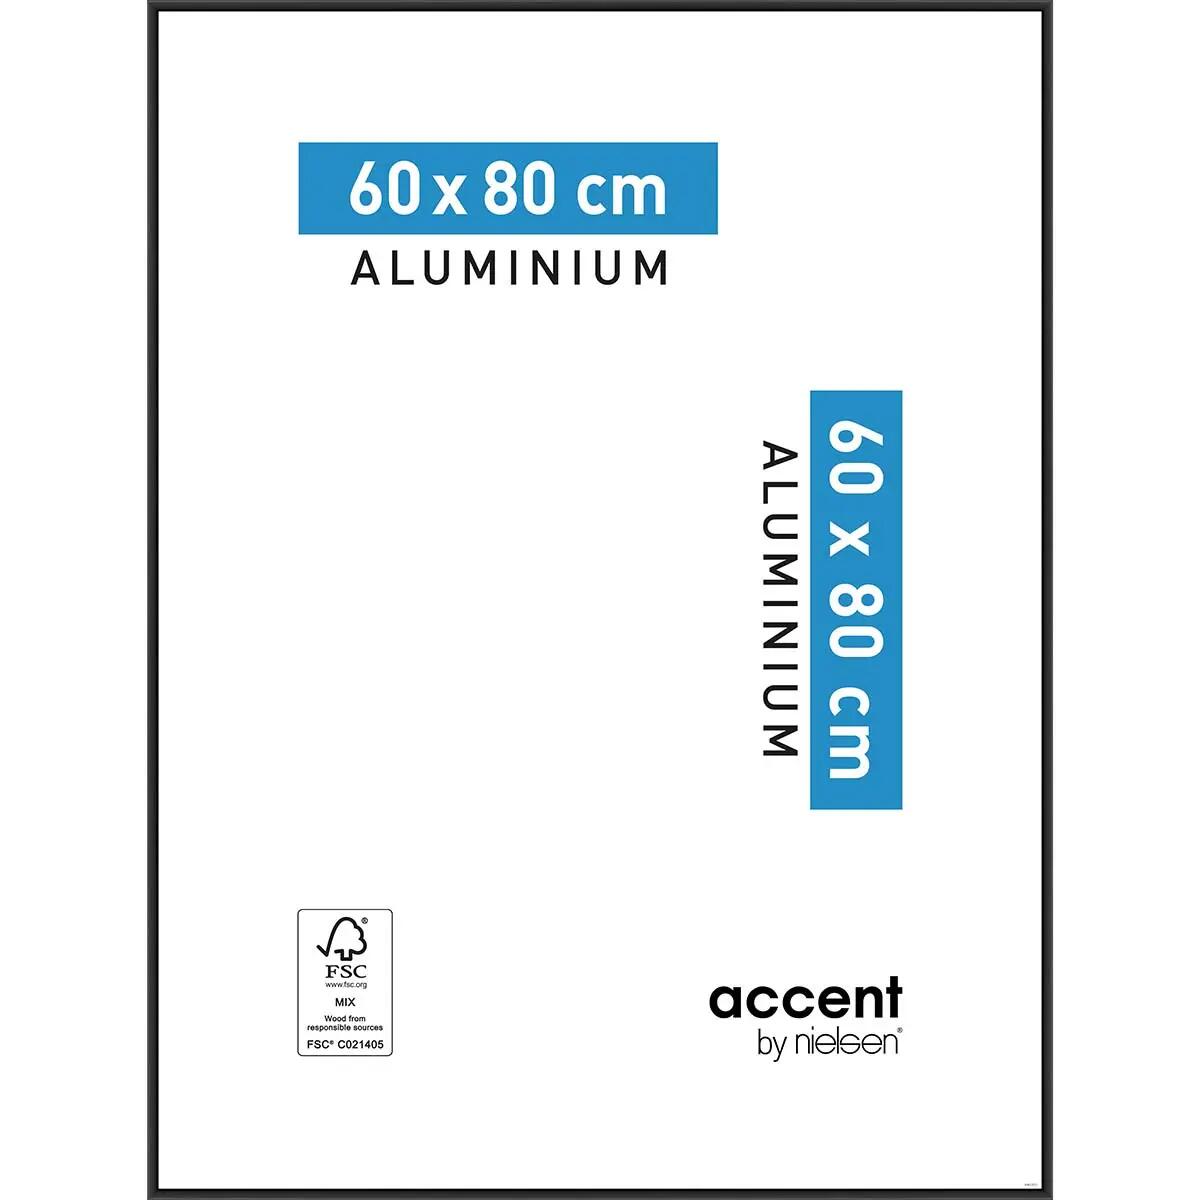 Nielsen Marco de aluminio Classic 60x90 cm - negro mate - Cristal